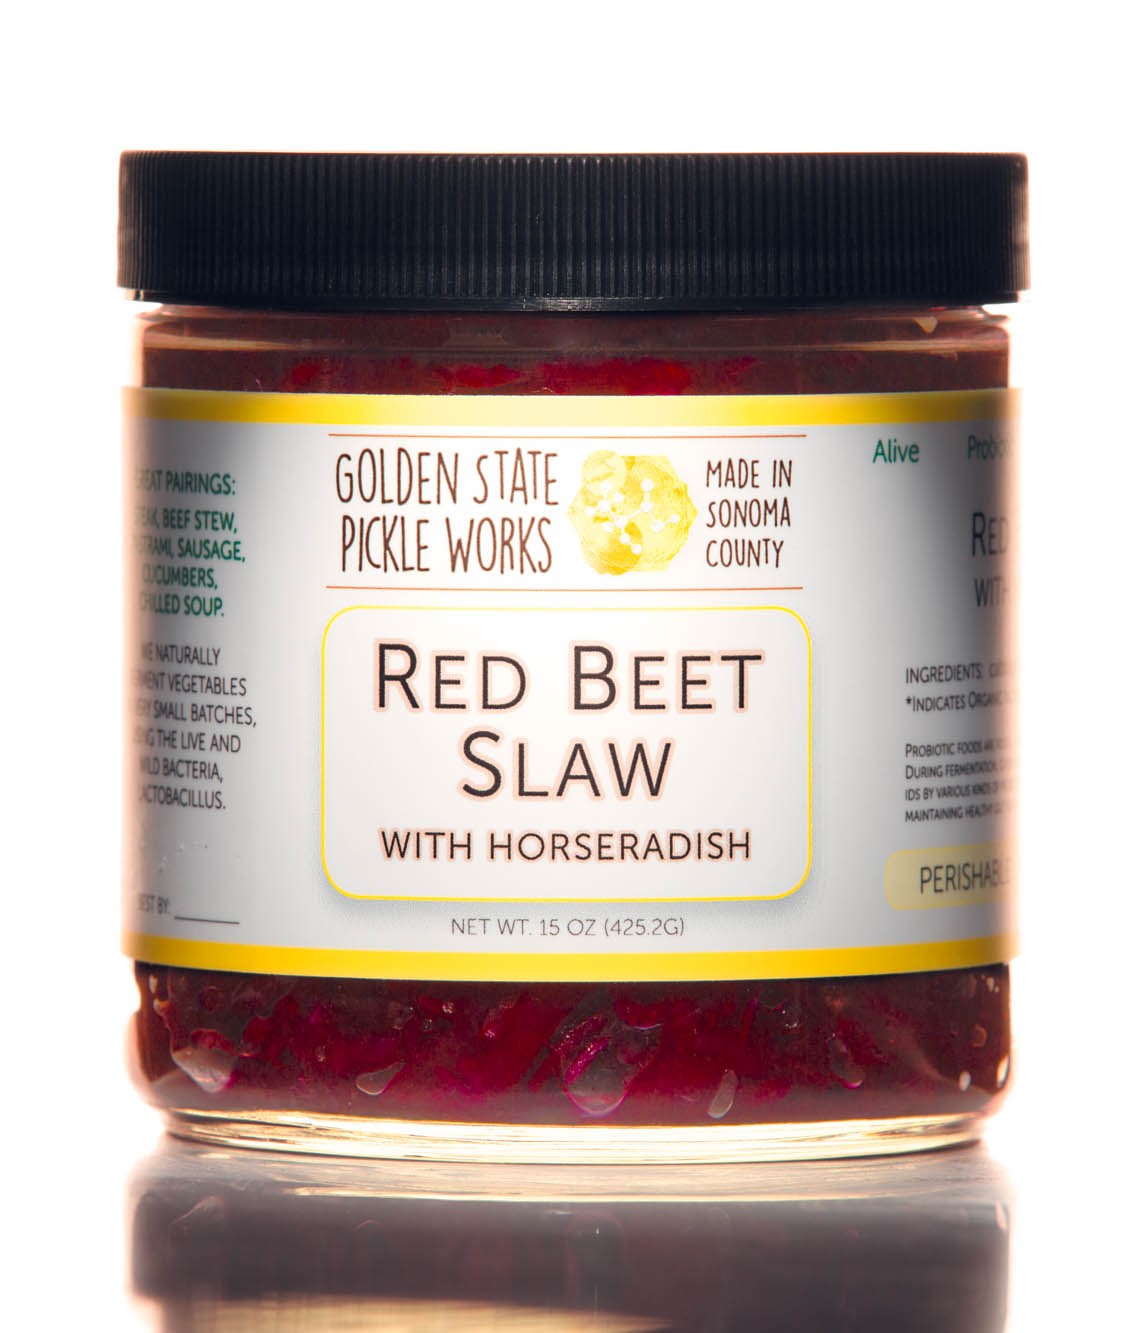 Red Beet Slaw with Horseradish